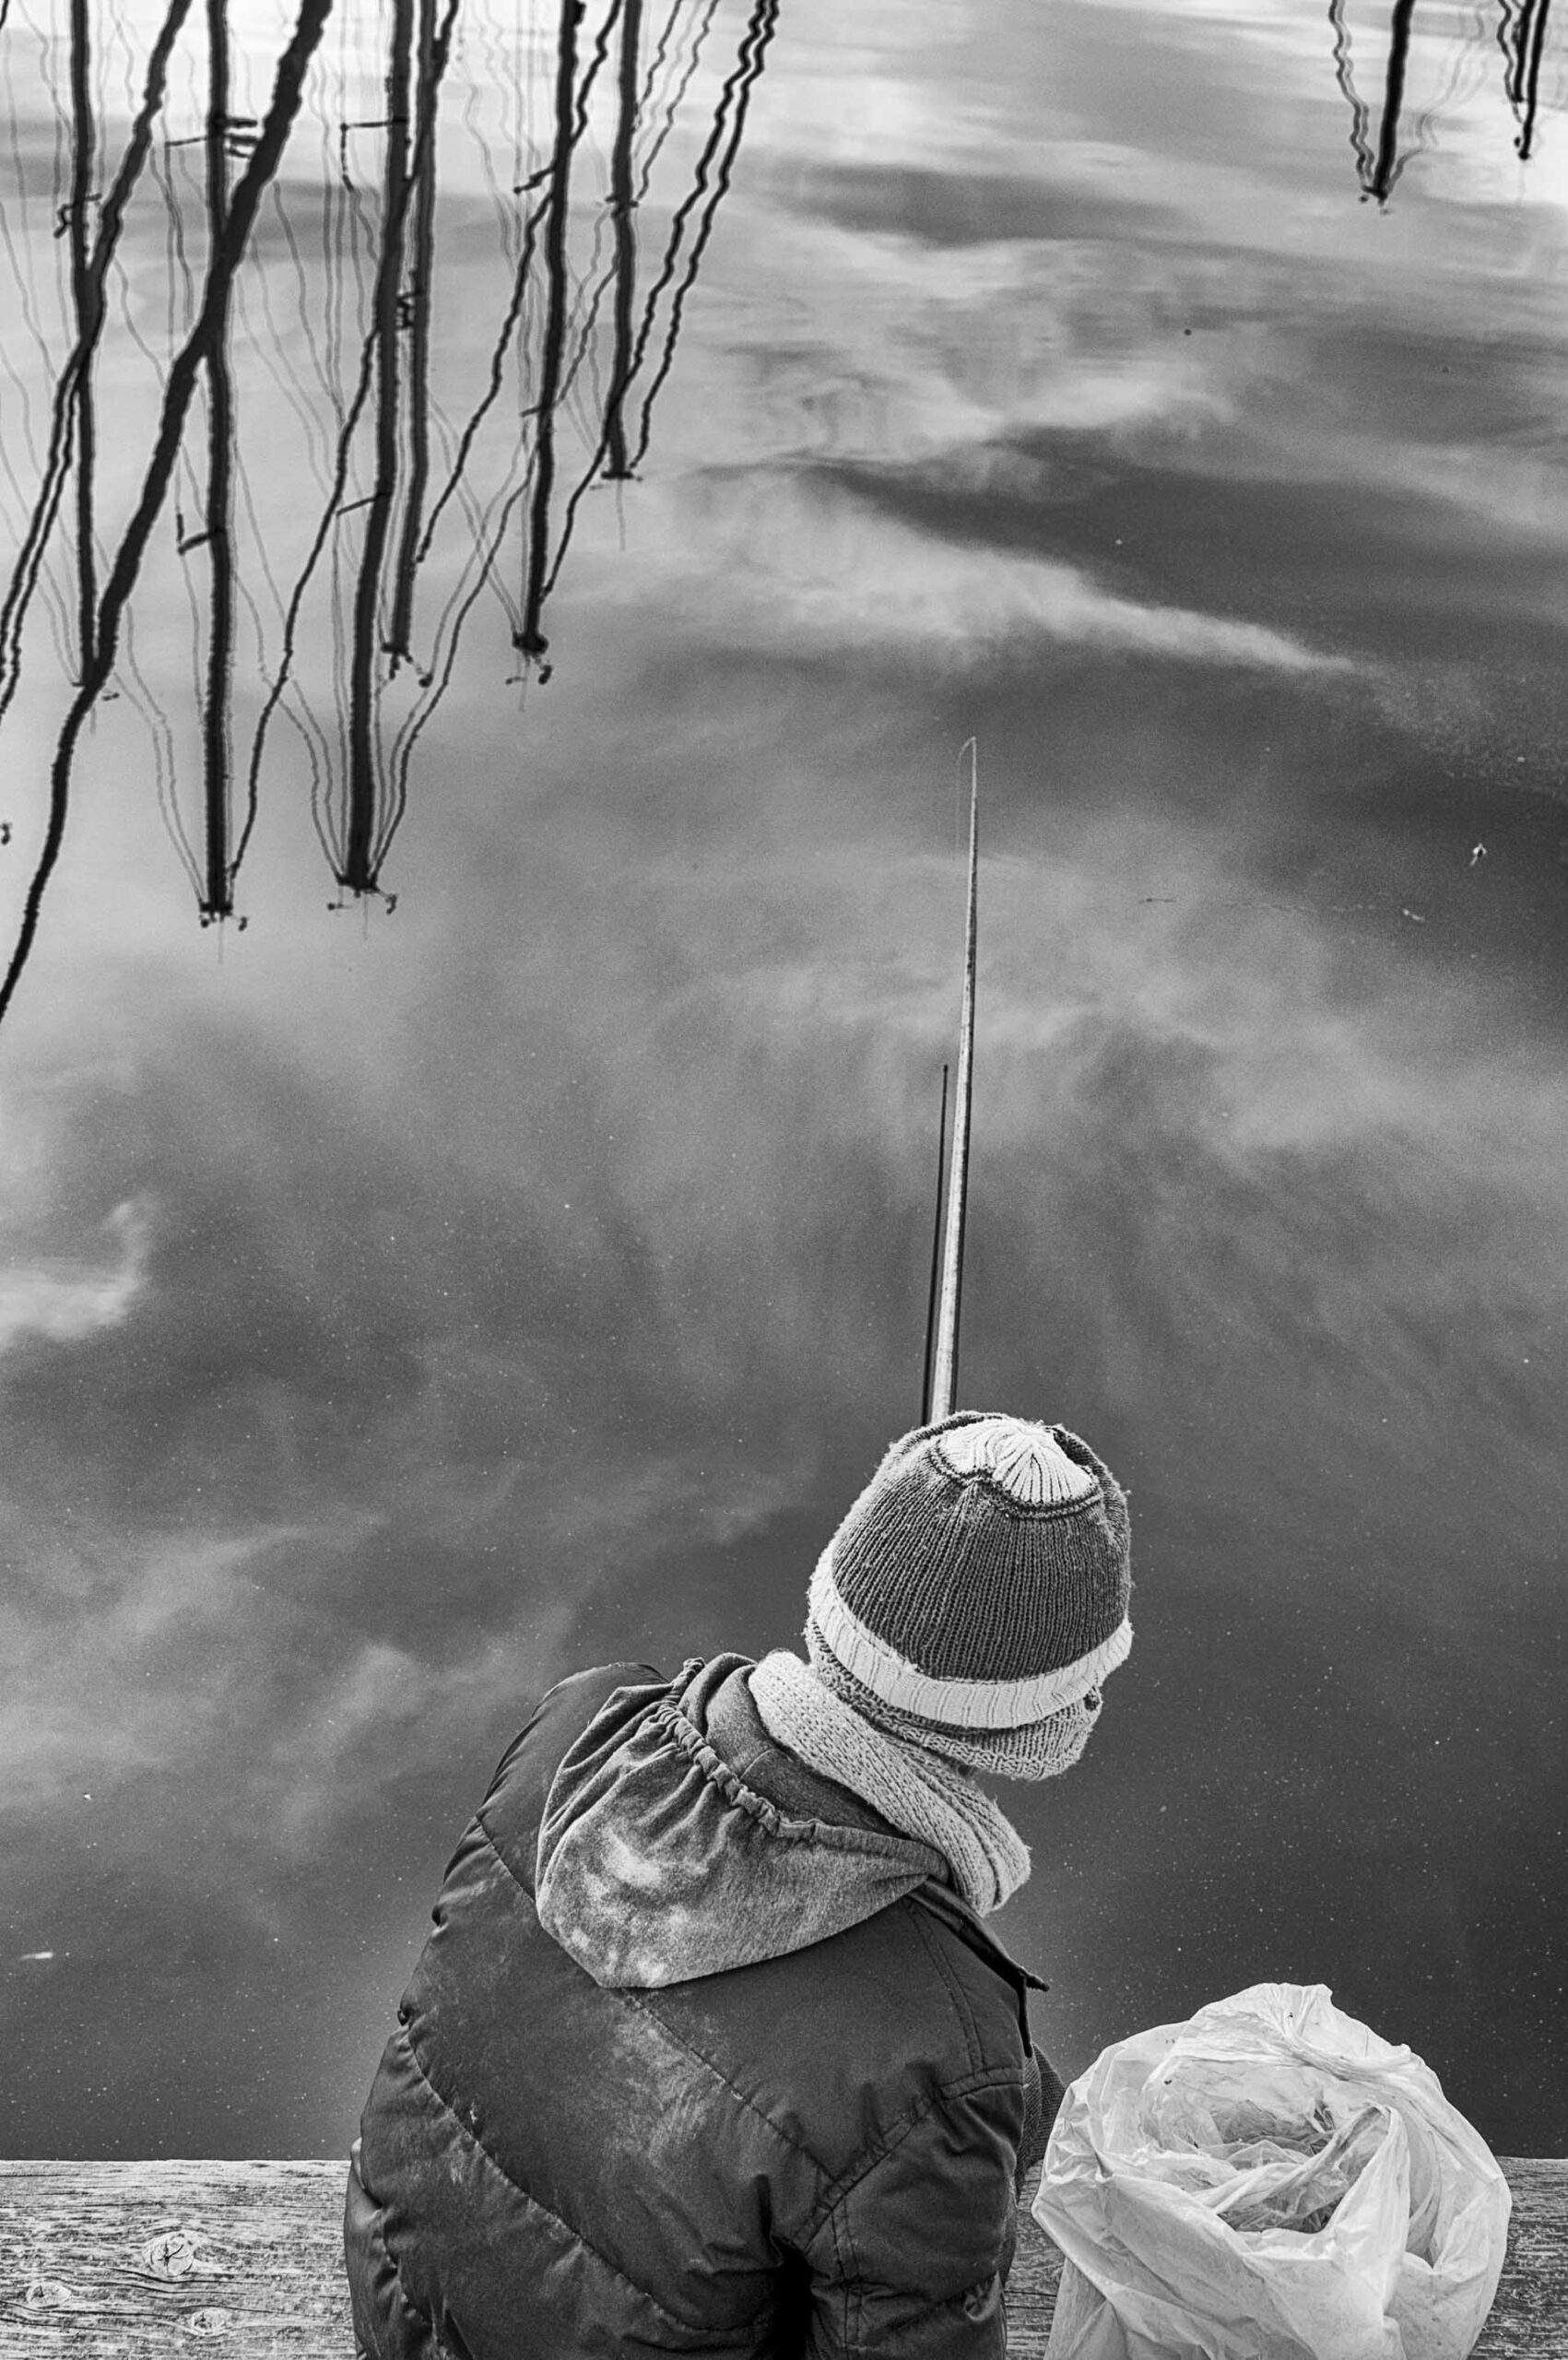 Fishing in the sky